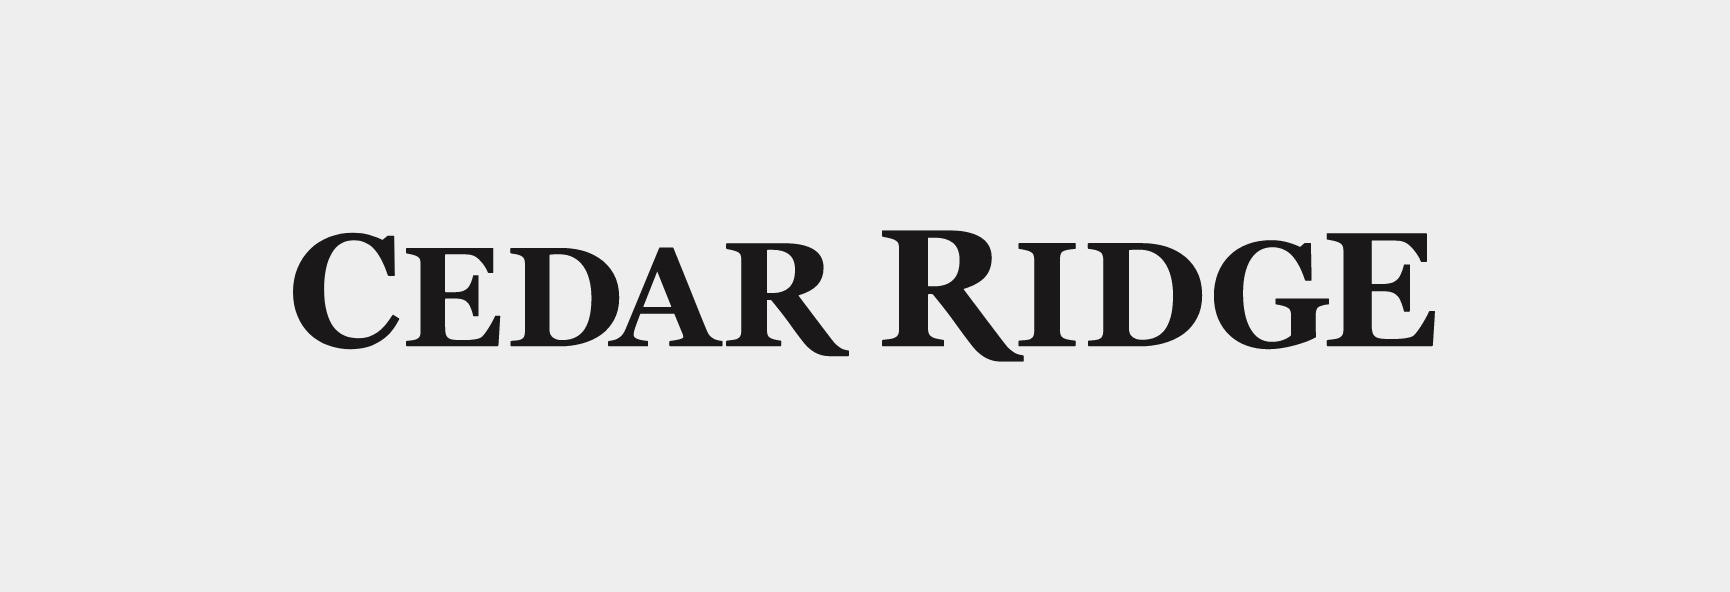 Cedar Ridge brand logo